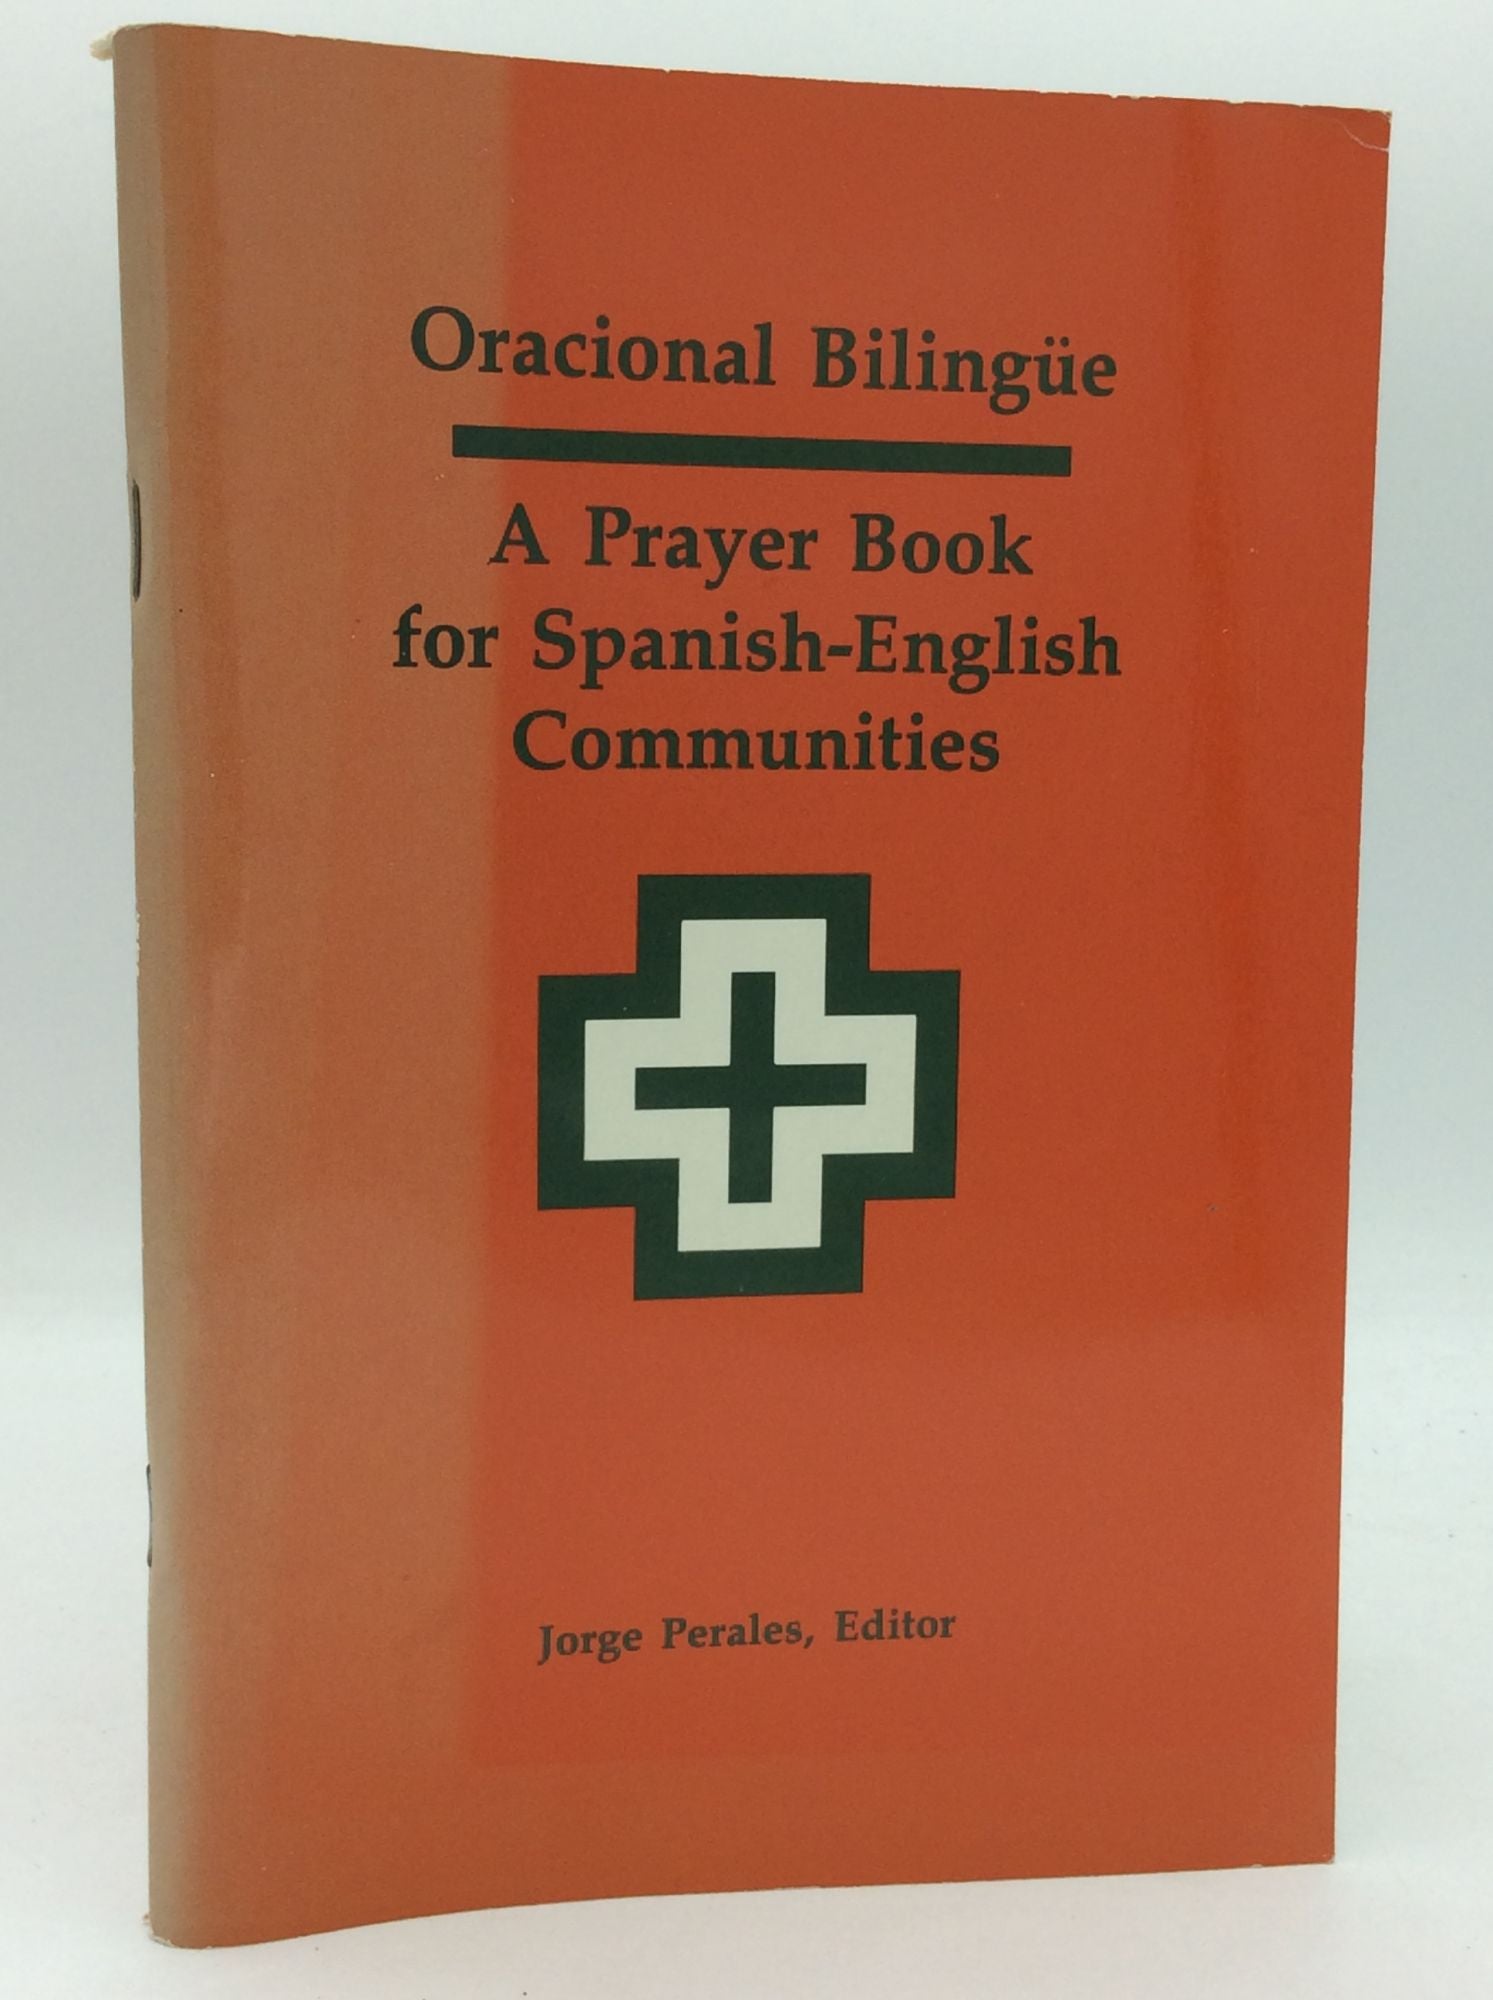 Rev. Jorge Perales, ed - Oracional Bilingue: A Prayer Book for Spanish-English Communities